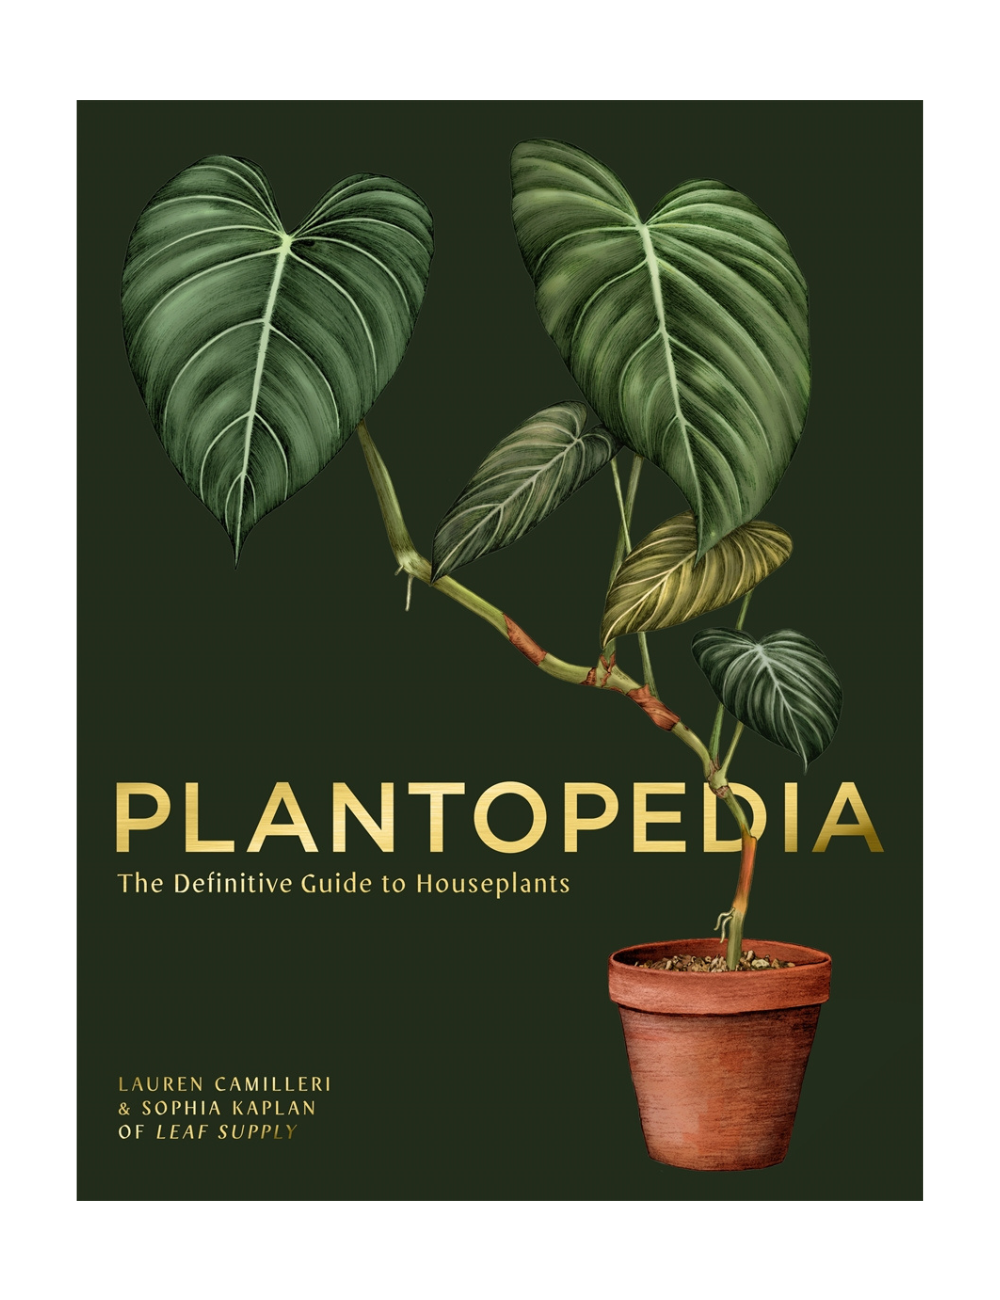 Plantopedia